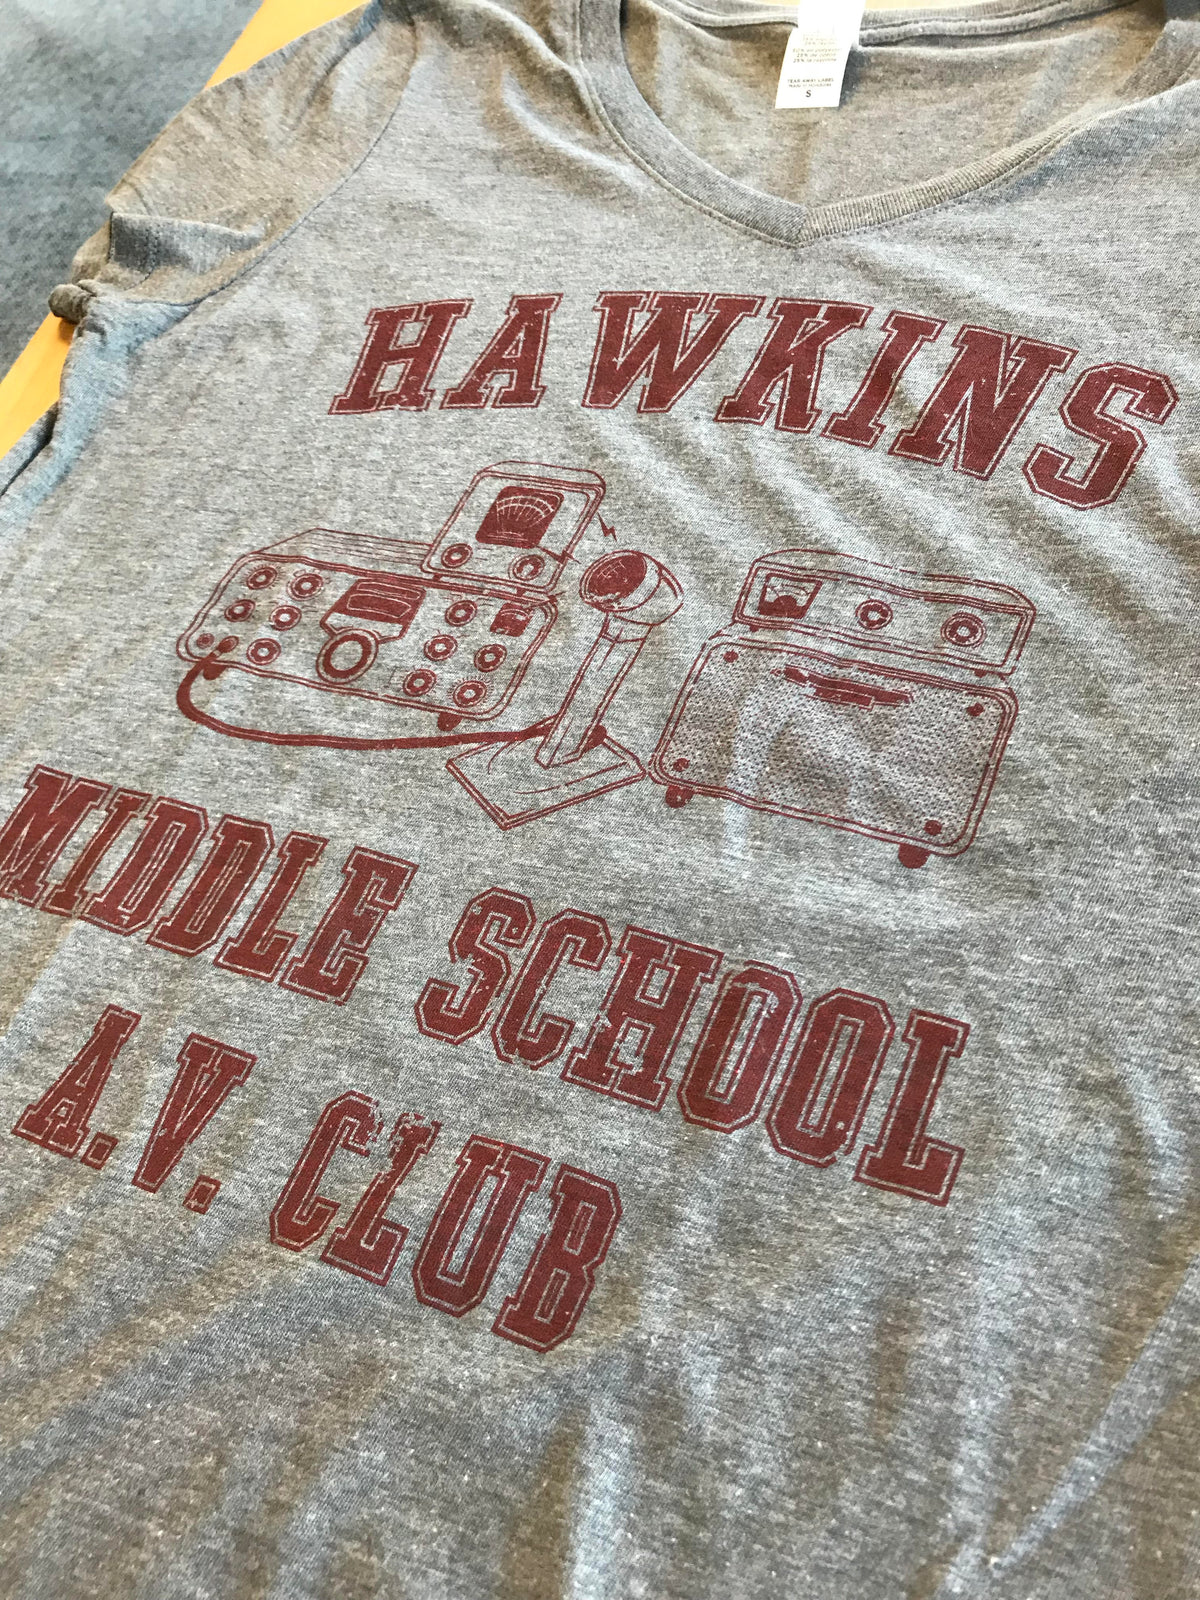 Hawkins Middle School A.V. Club | Vintage 80s AV Hawkin Women V-neck T-shirt Top